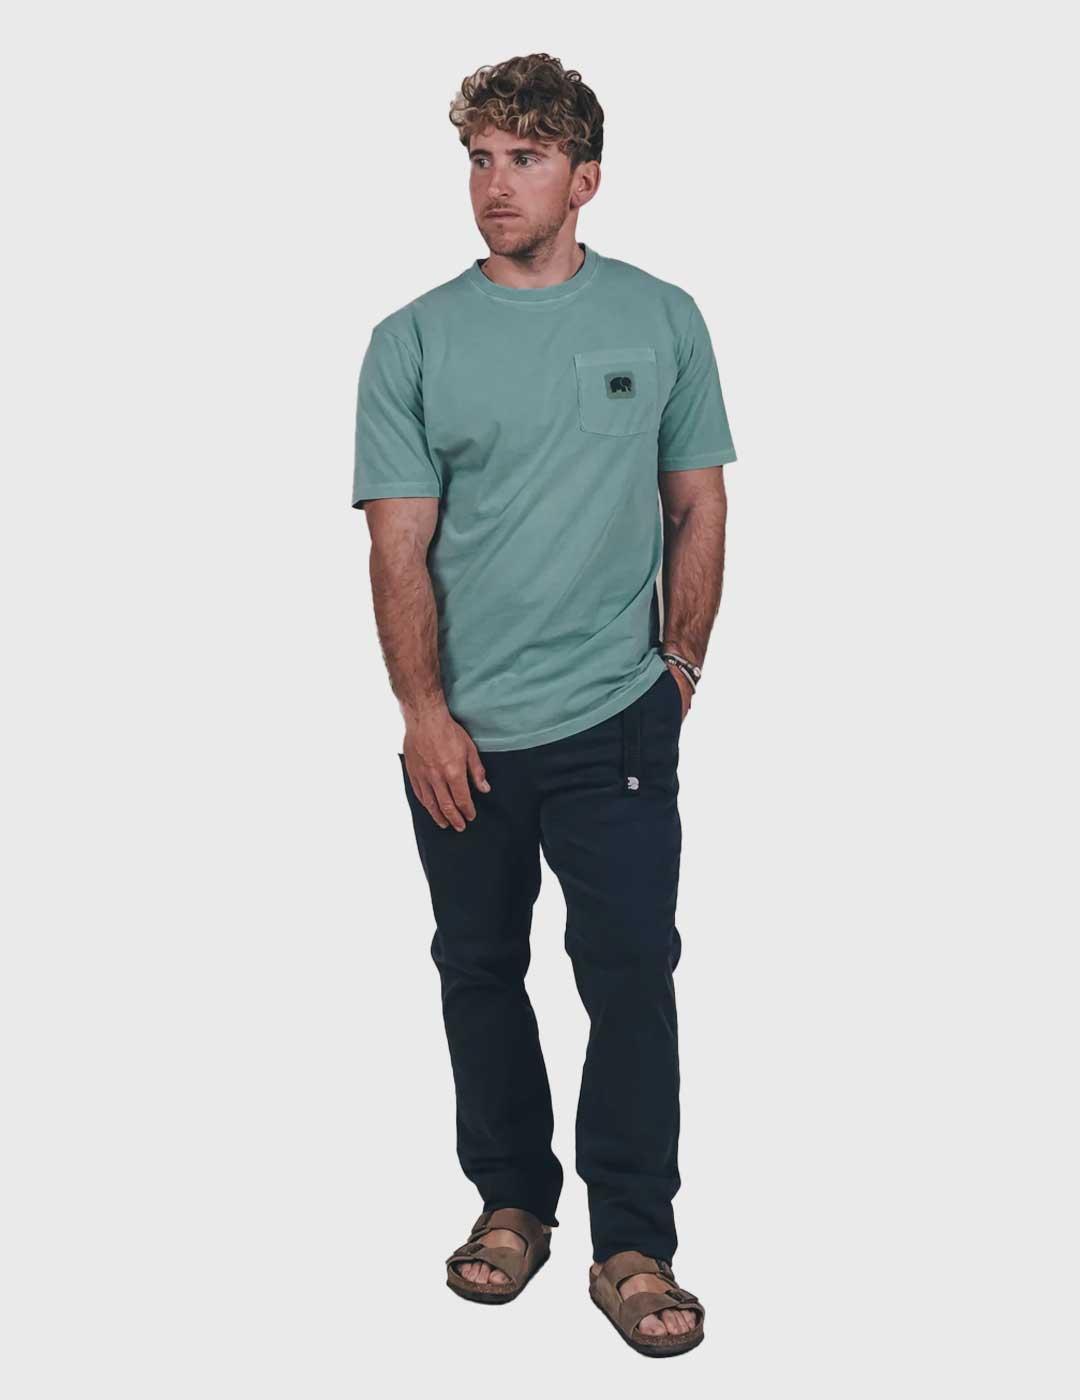 Trendsplant Sunset Pocket Camiseta verde para hombre